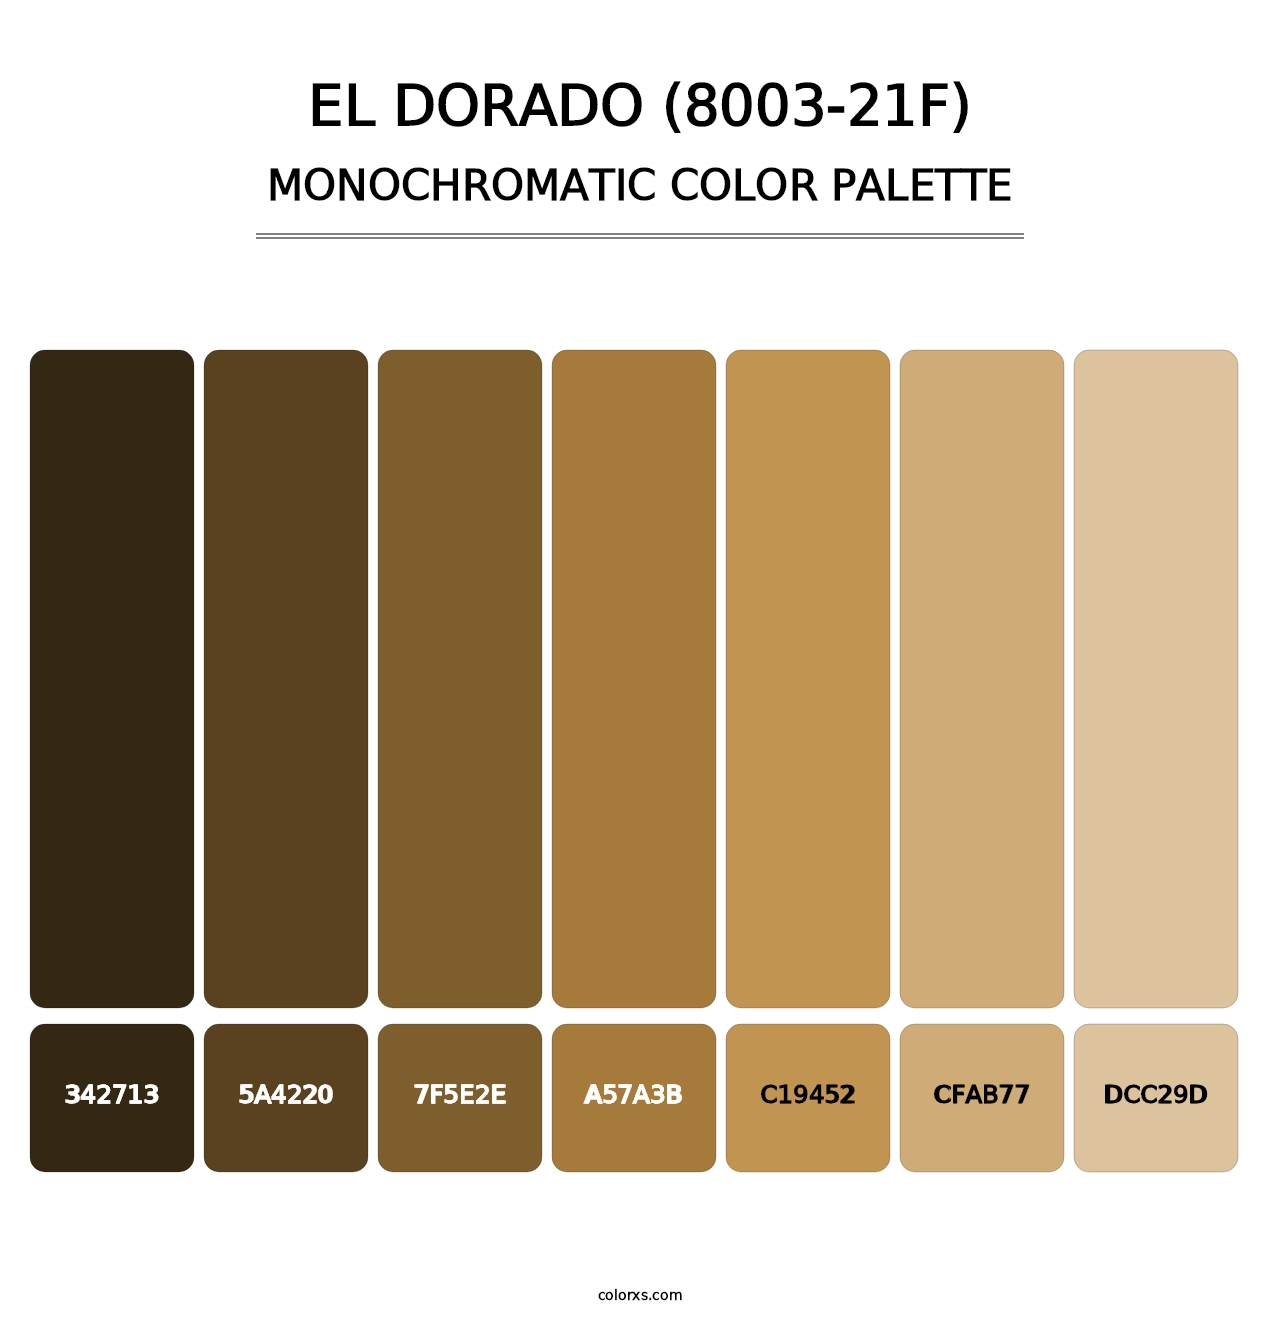 El Dorado (8003-21F) - Monochromatic Color Palette